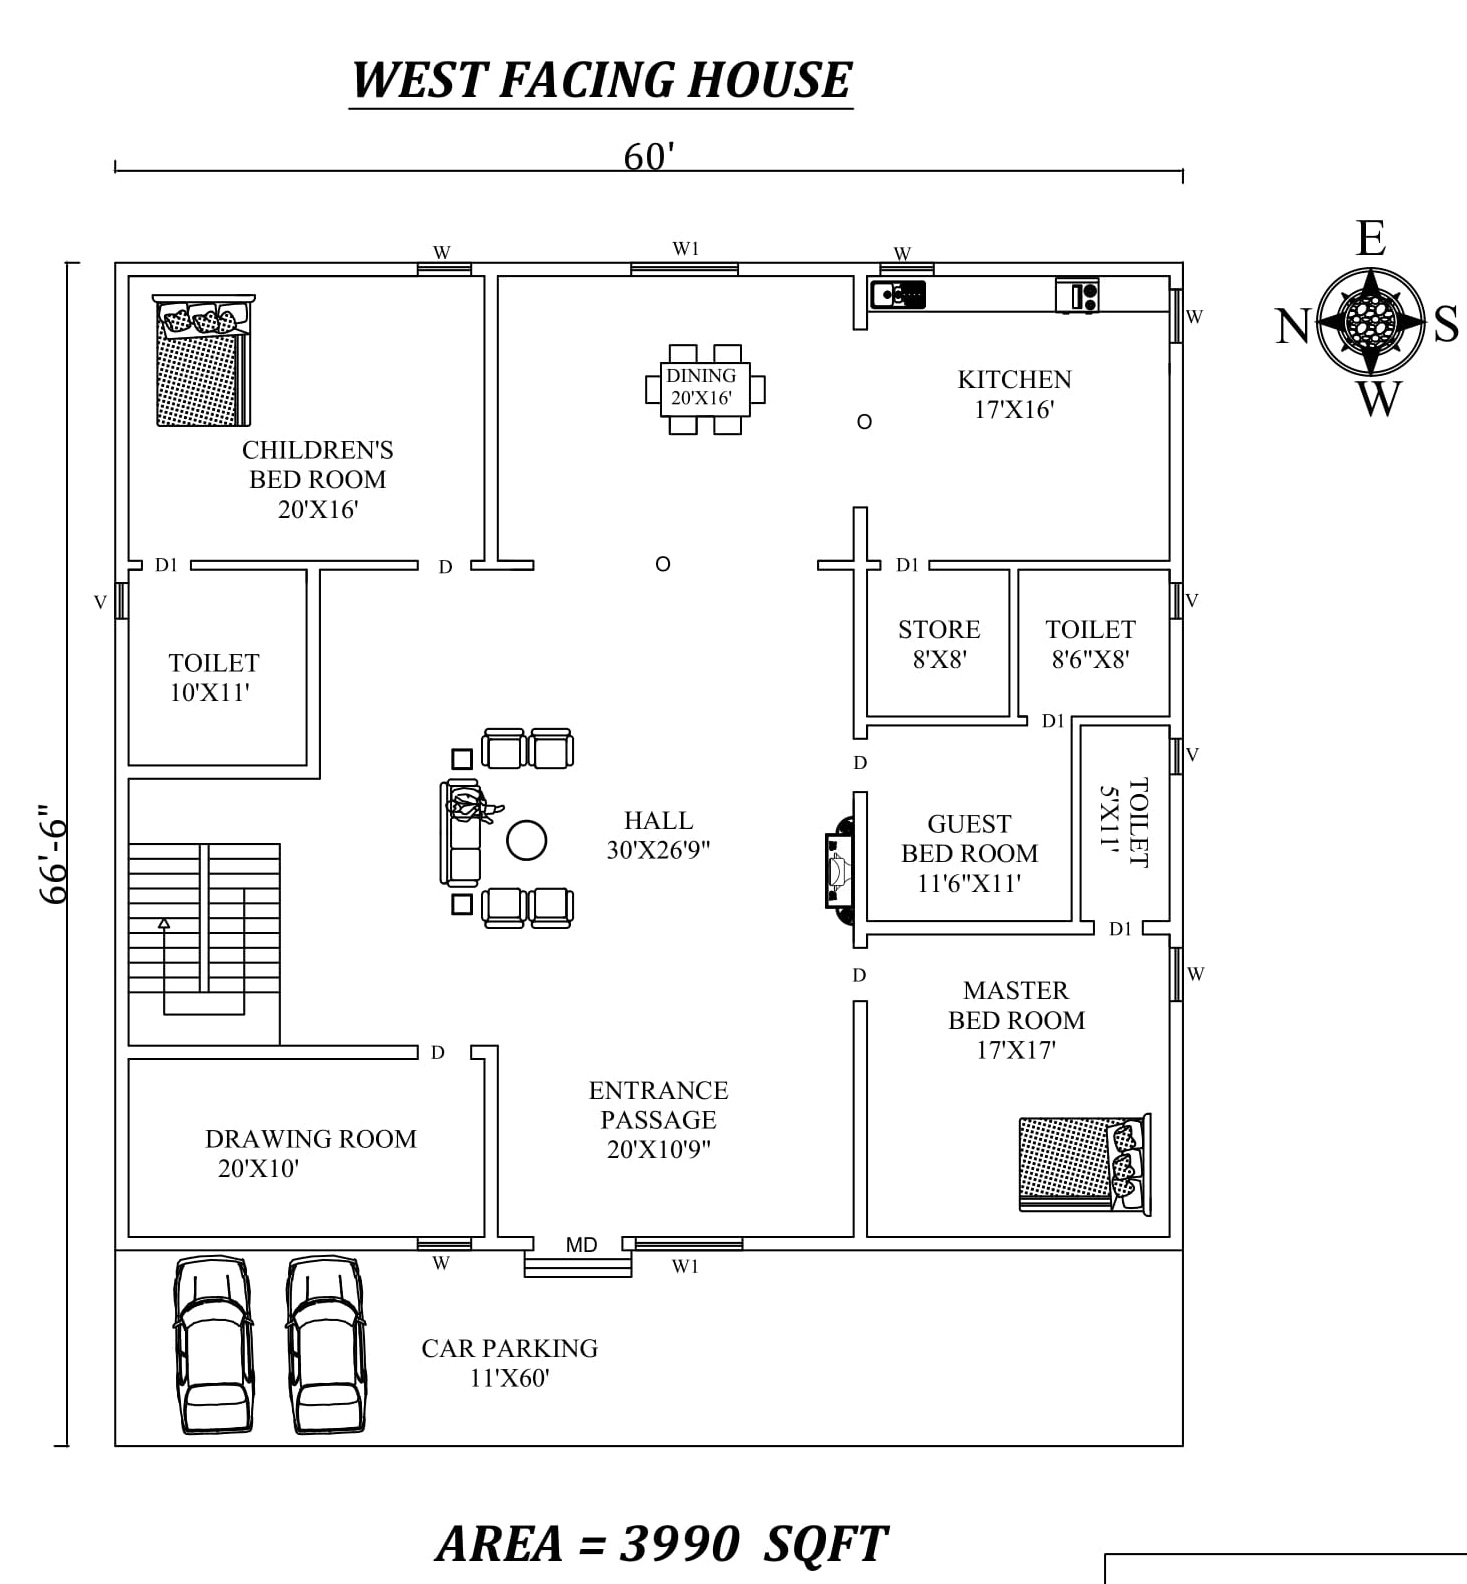 60'x66'6" Beautiful 3bhk West facing House Plan As Per